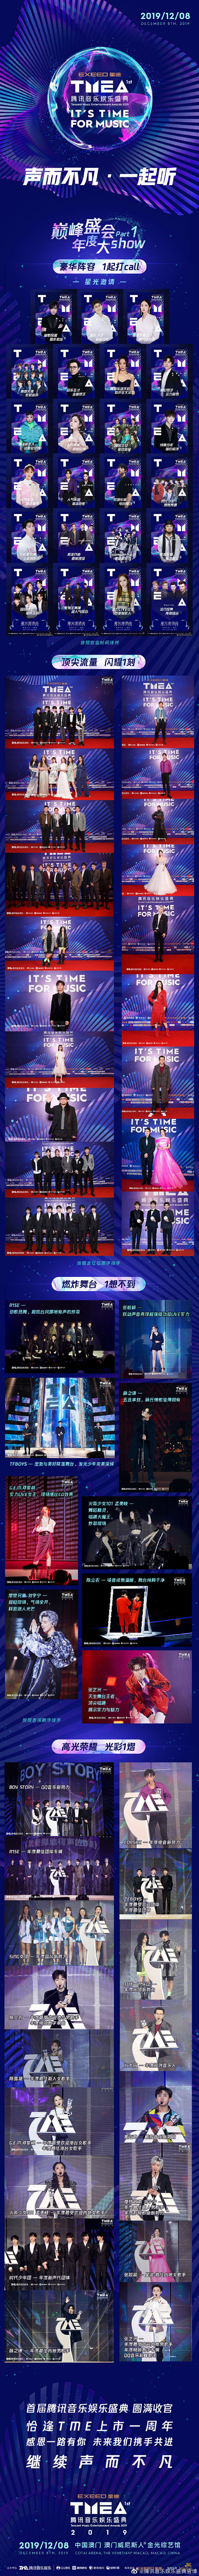 2019TMEA#腾讯音乐娱乐盛典#圆满...